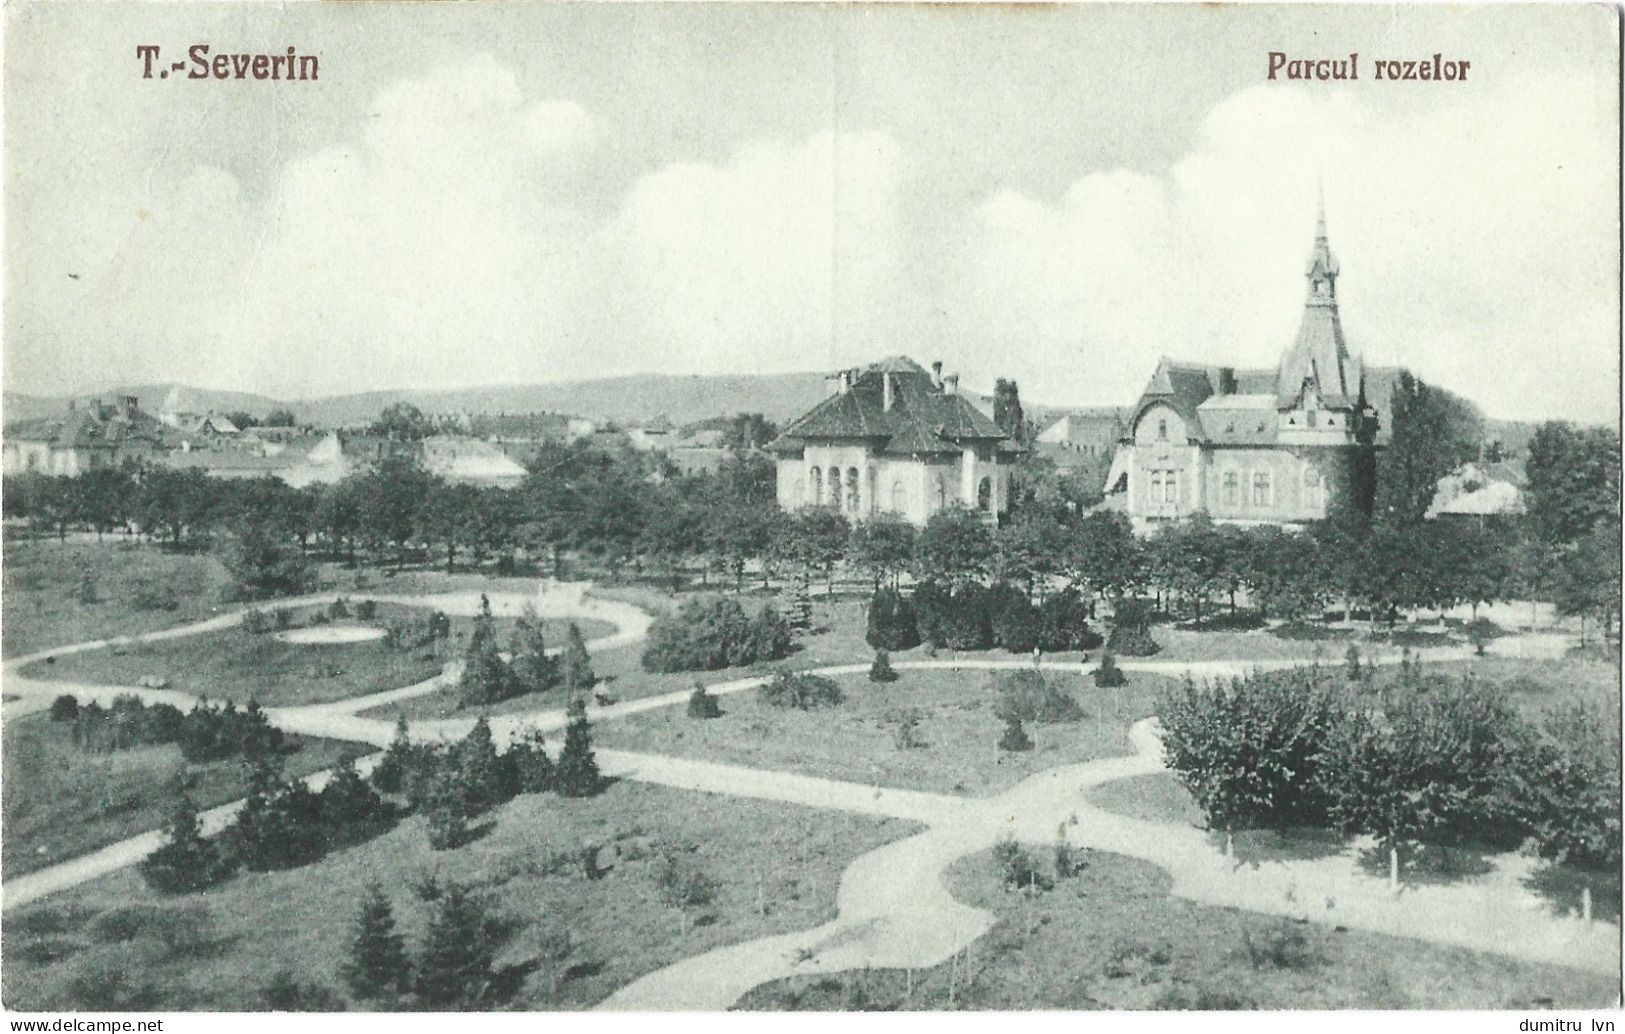 ROMANIA 1928 TURNU-SEVERIN - THE PARK OF ROSES, BUILDINGS, ARCHITECTURE, PEOPLE - Romania